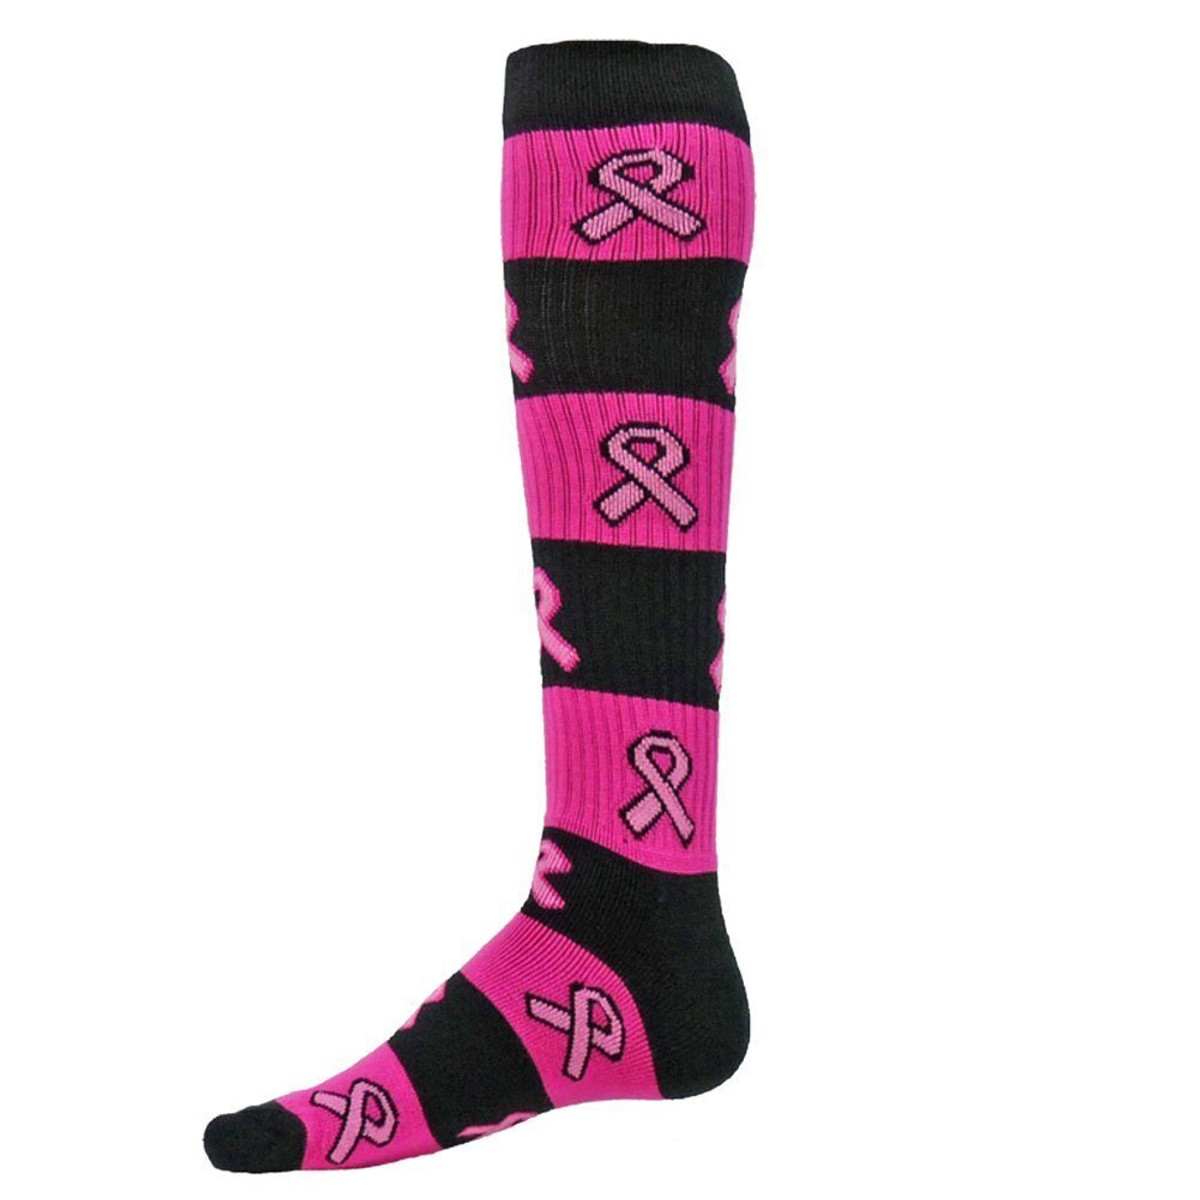 Black Neon Pink Ribbon Rugby Knee High Sports Socks